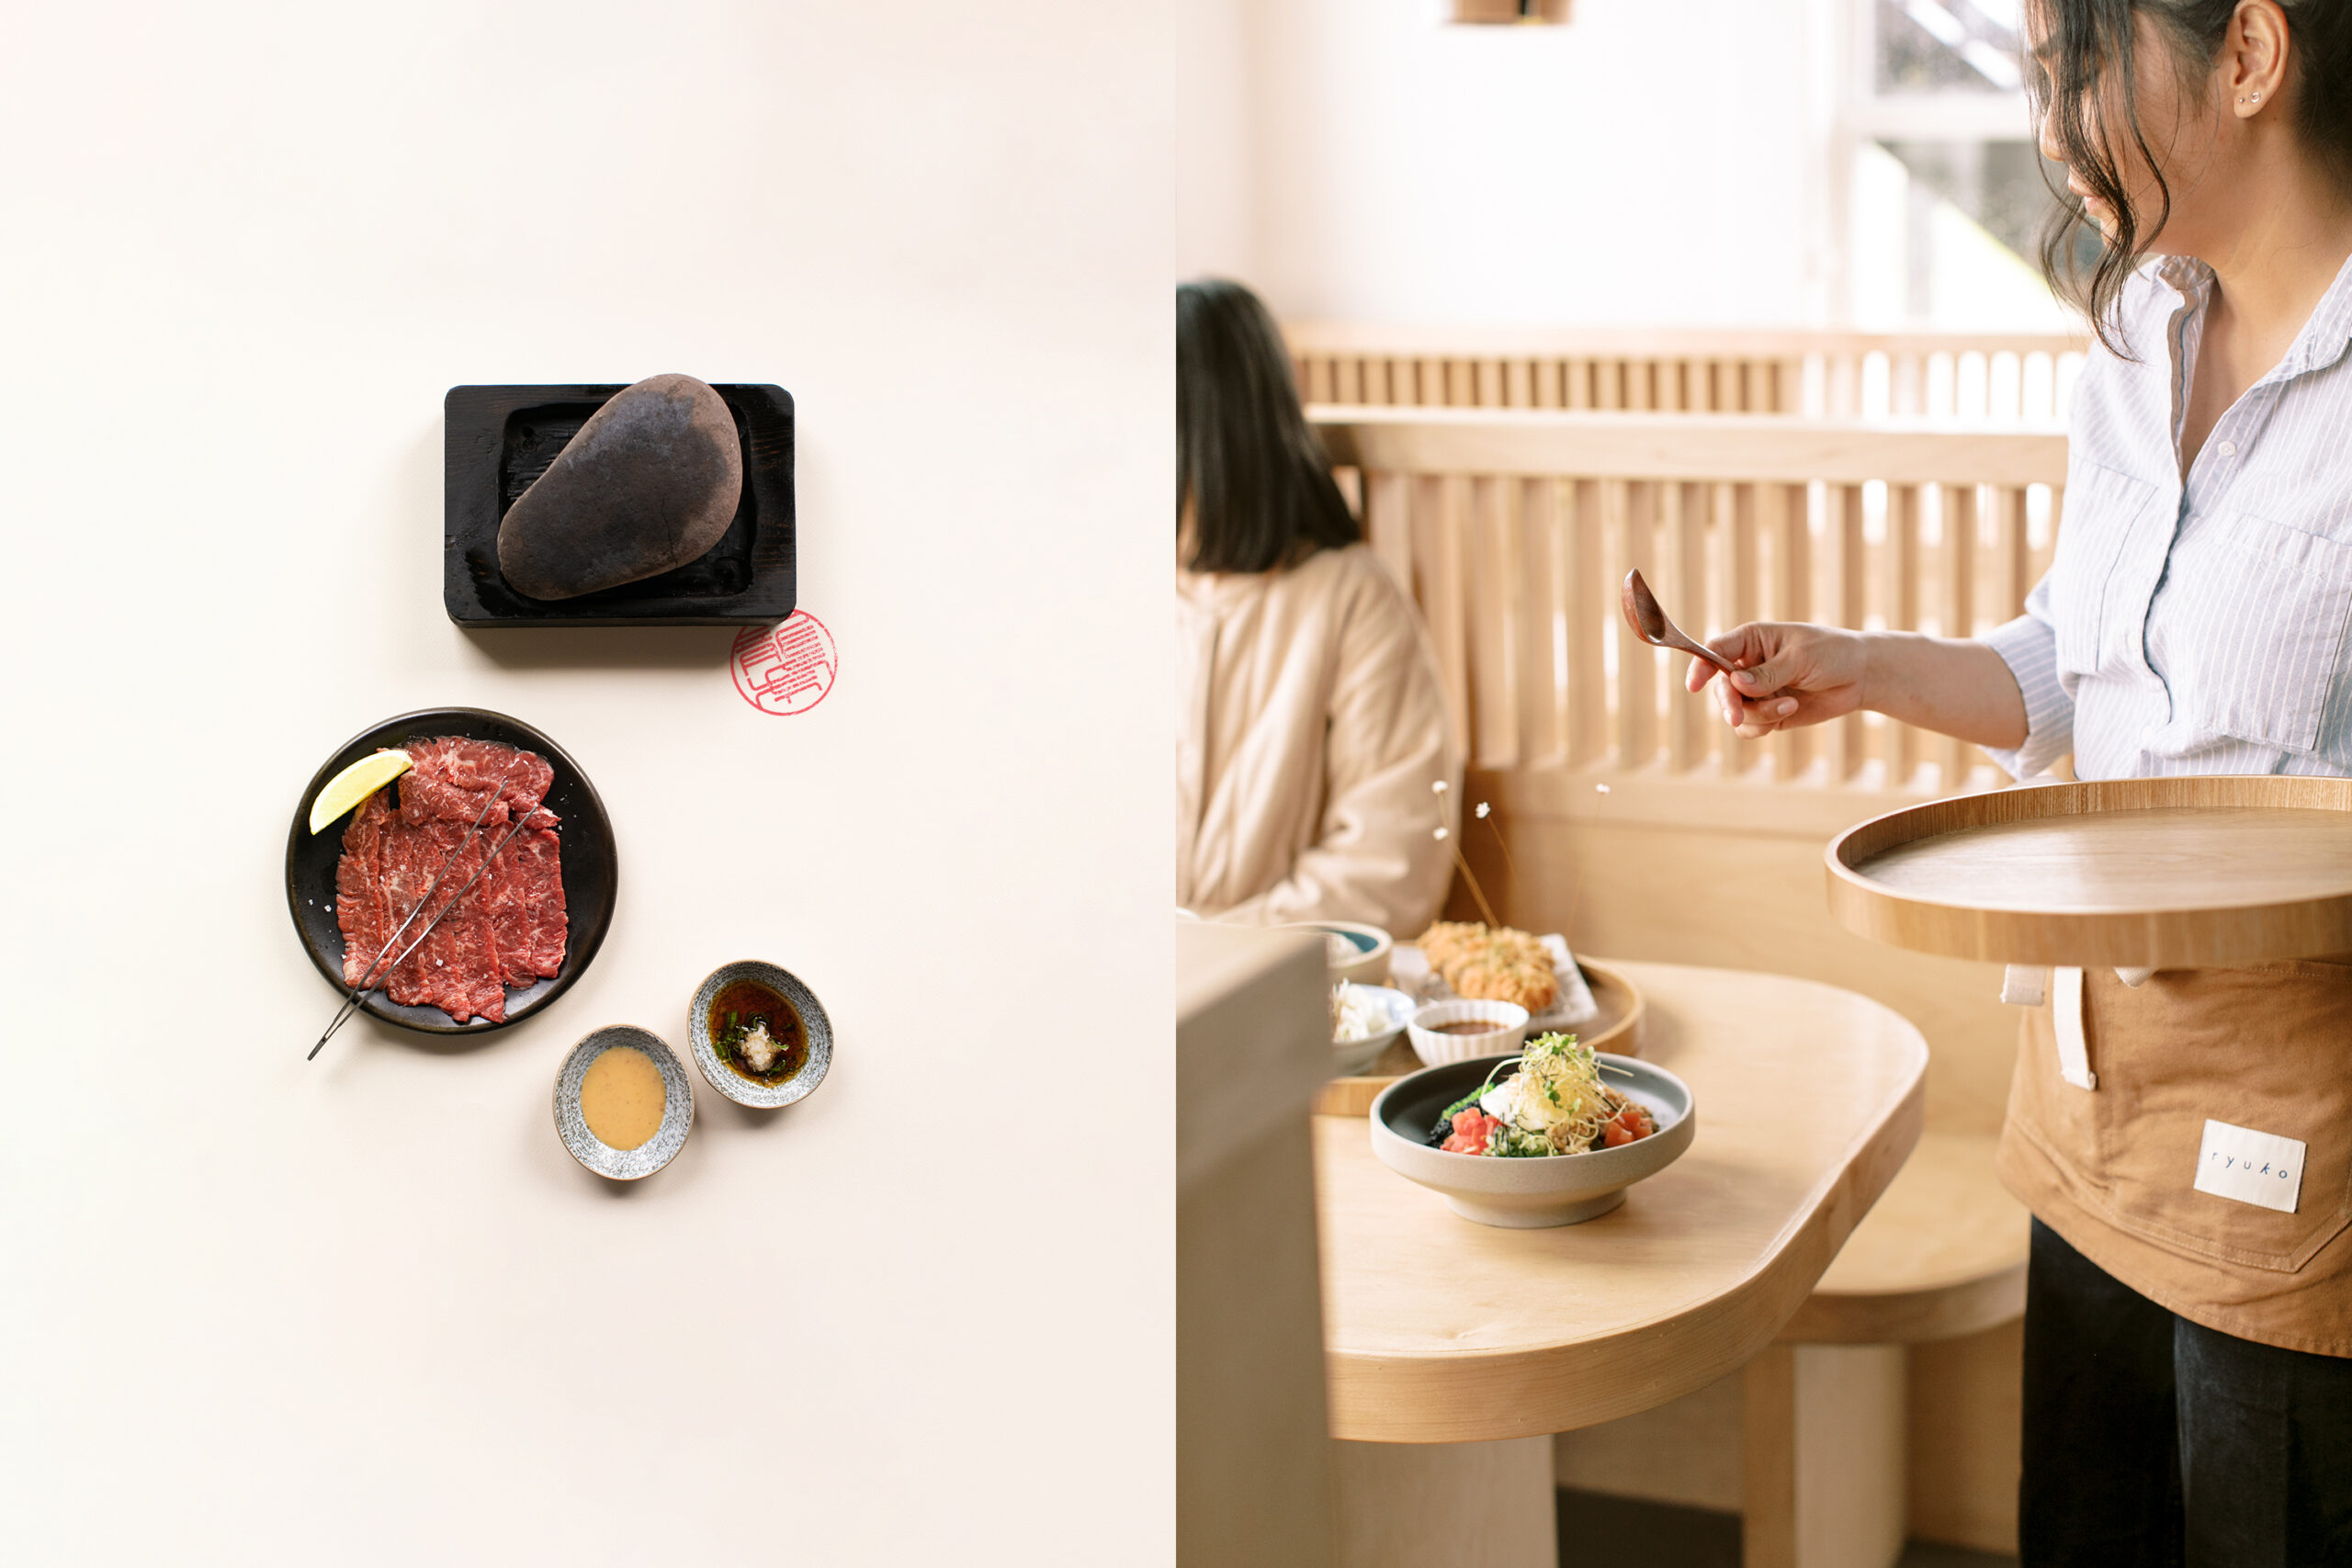 Ryuko日式餐厅视觉形象设计